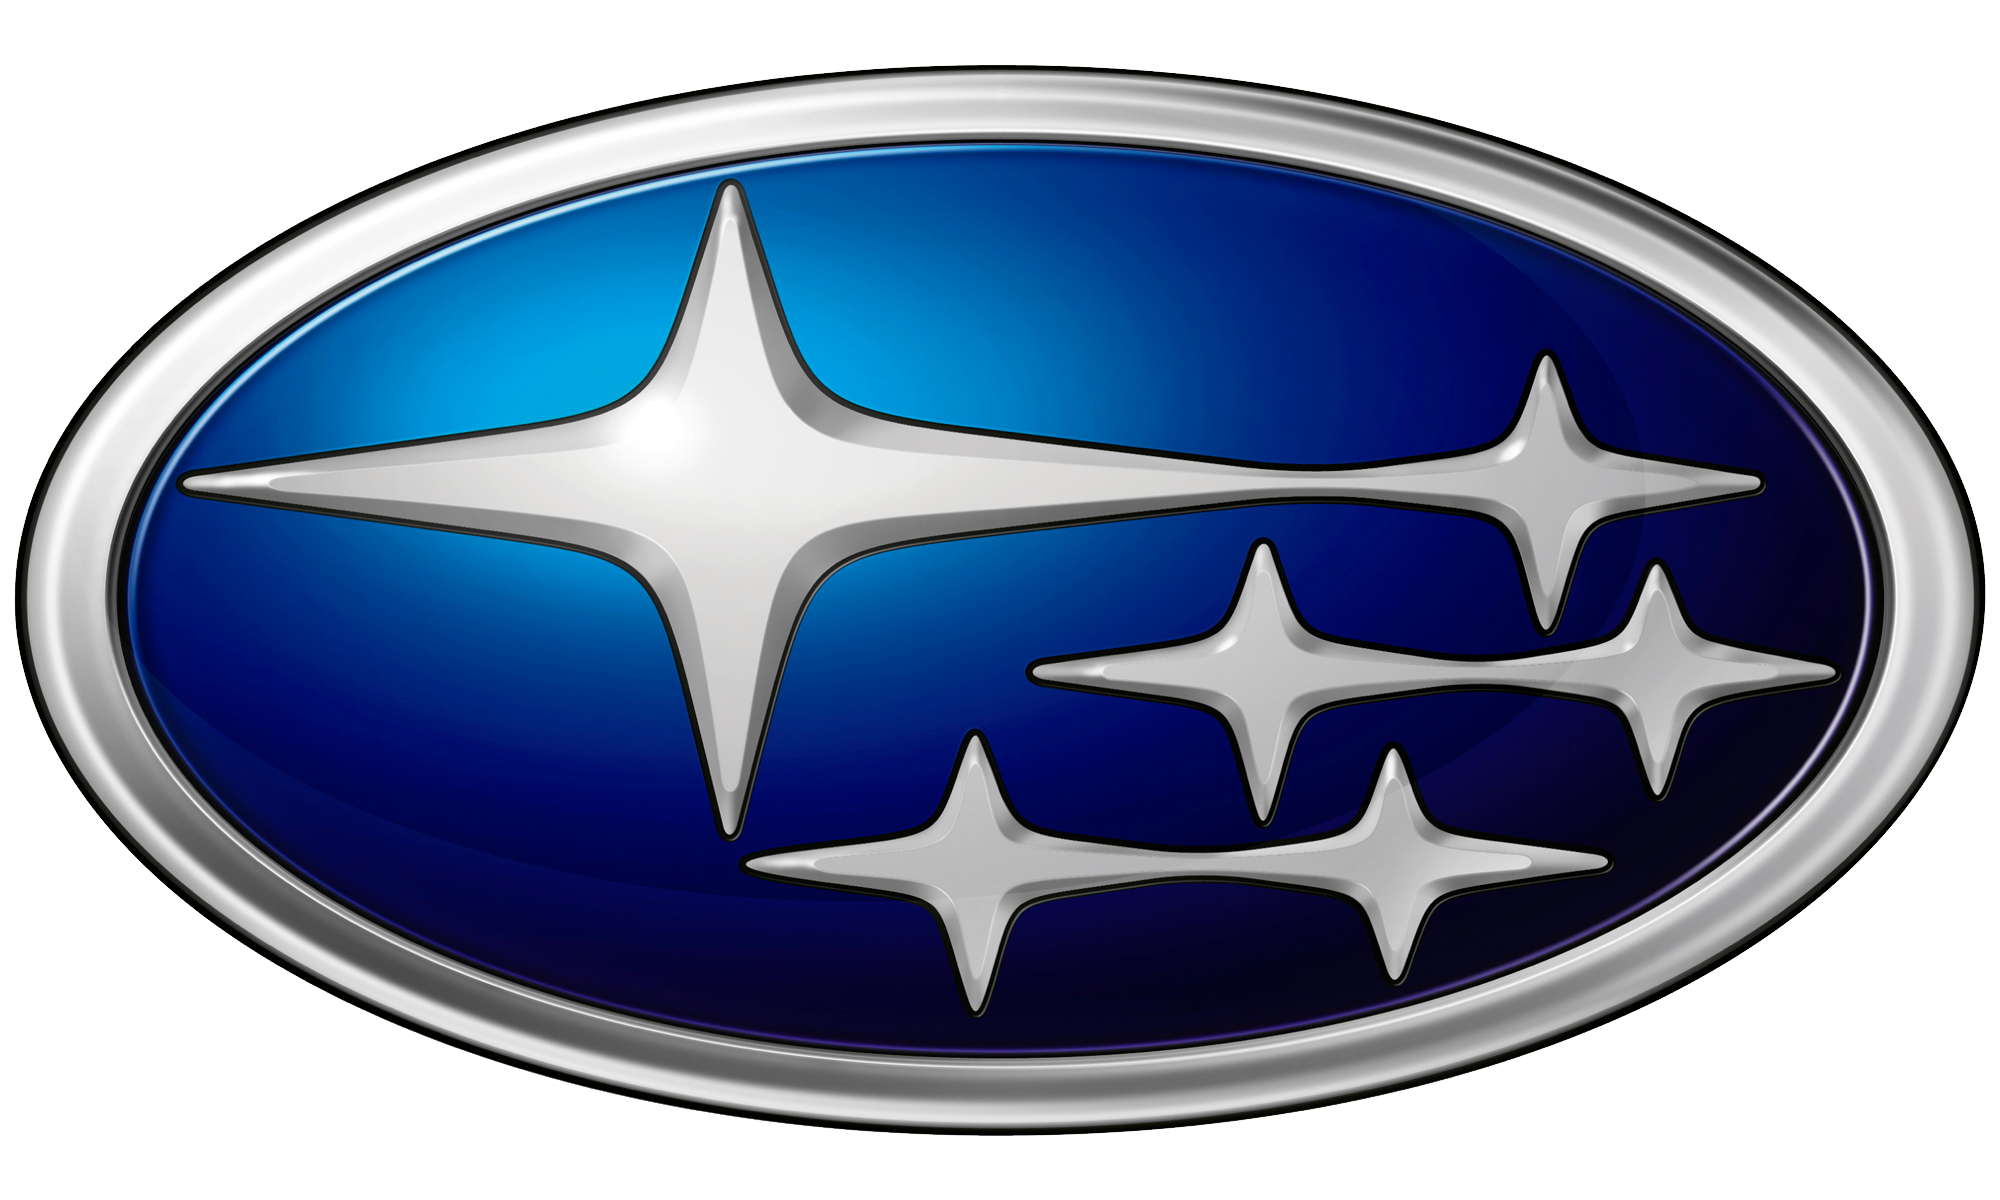 Subaru car logo PNG brand image